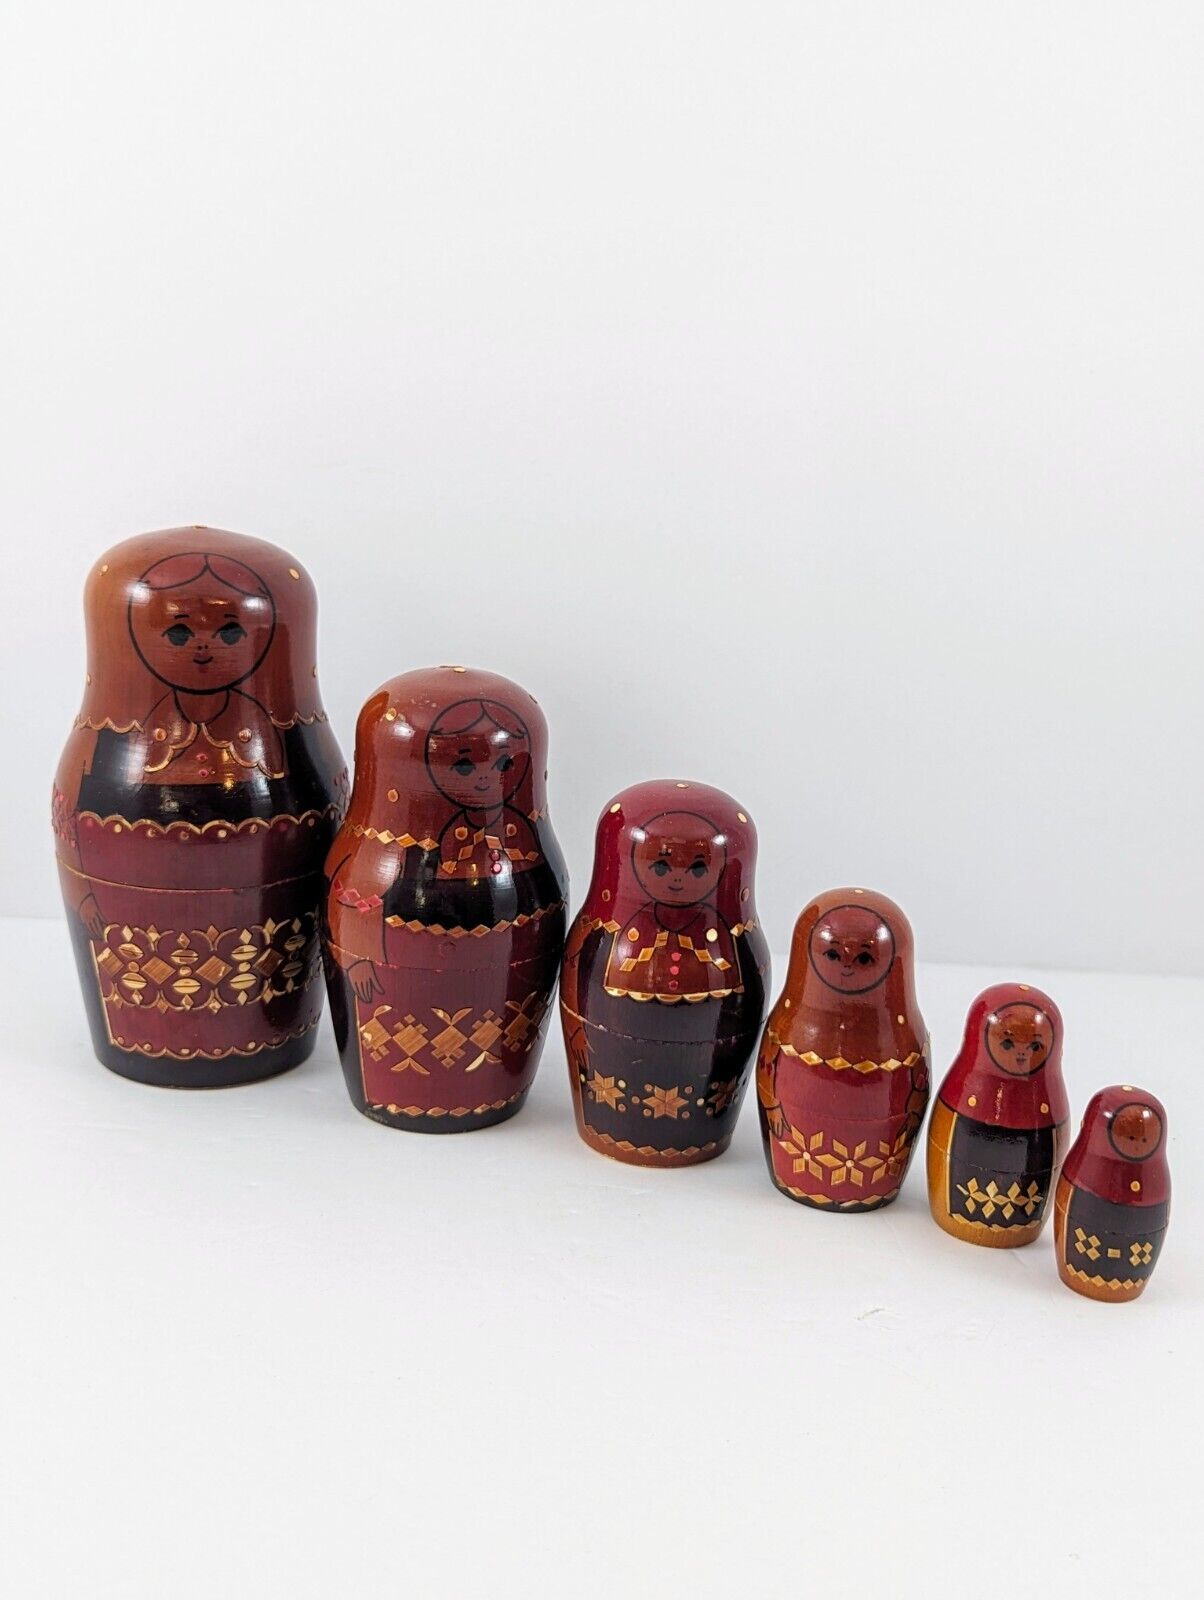 Vintage Russian Matryoshka Handmade Nesting Dolls - 6 Dolls